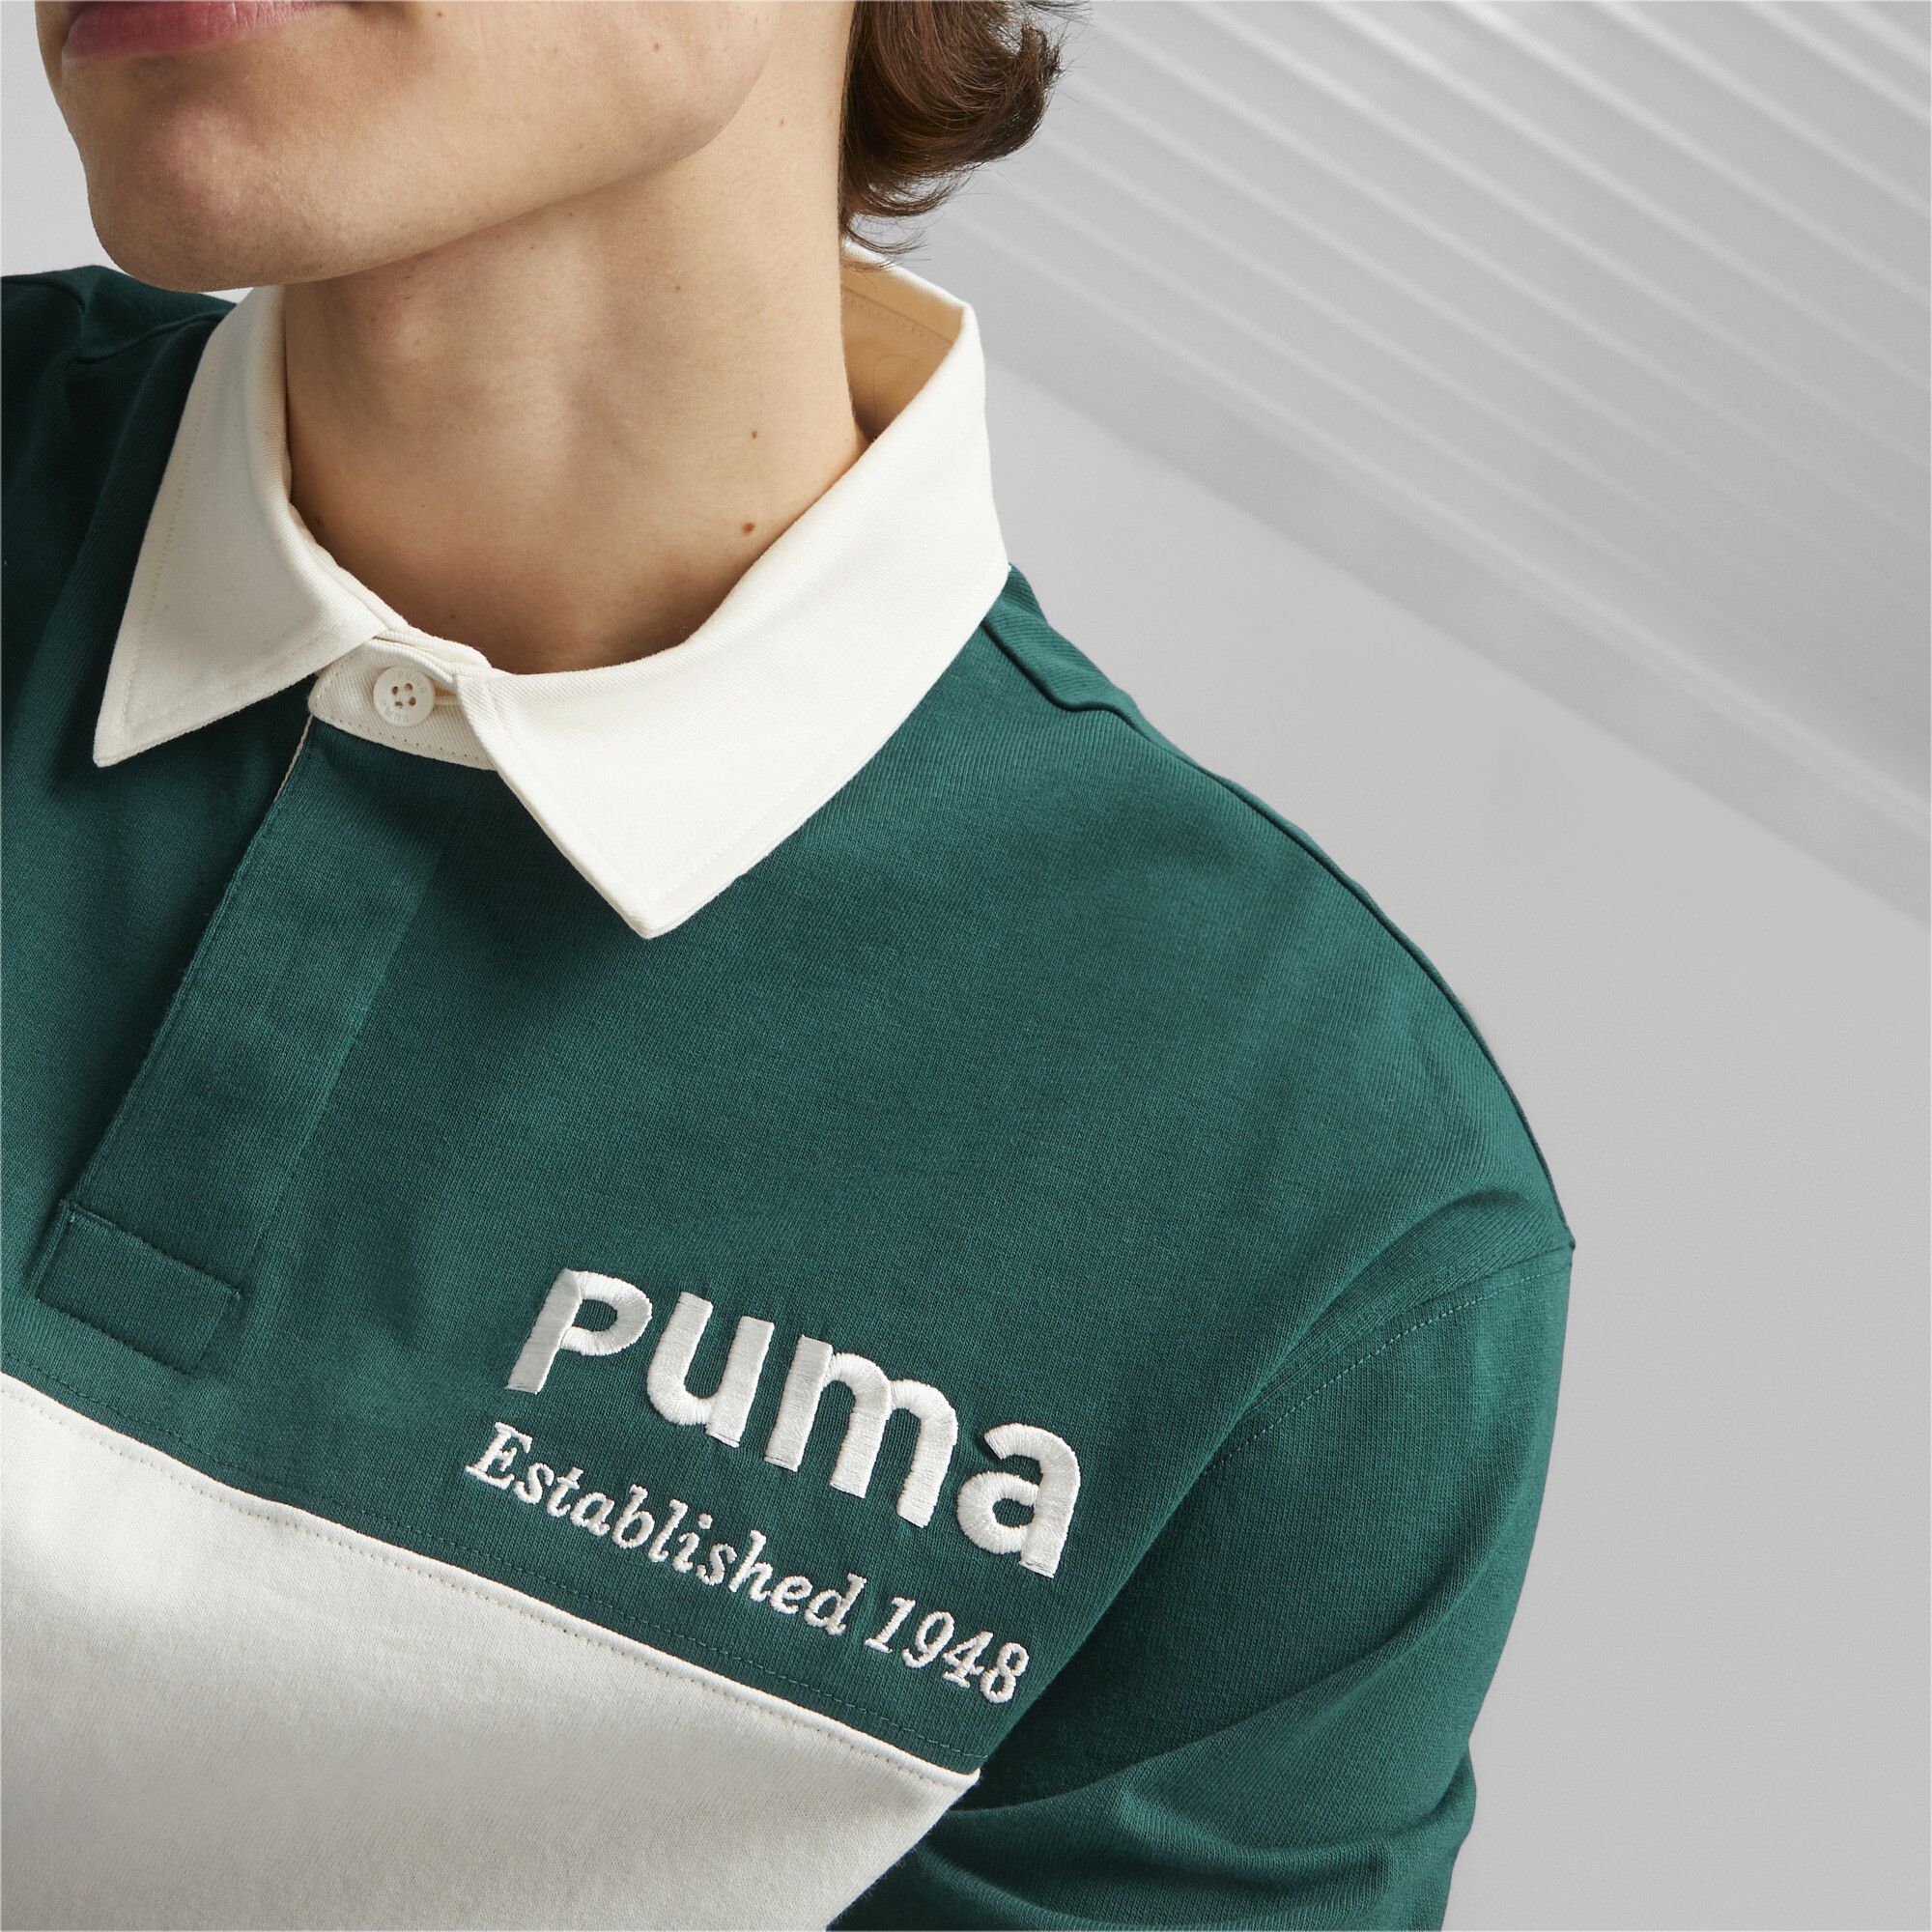 Men's Puma Team's Rugby Shirt, Green, Size XL, Clothing